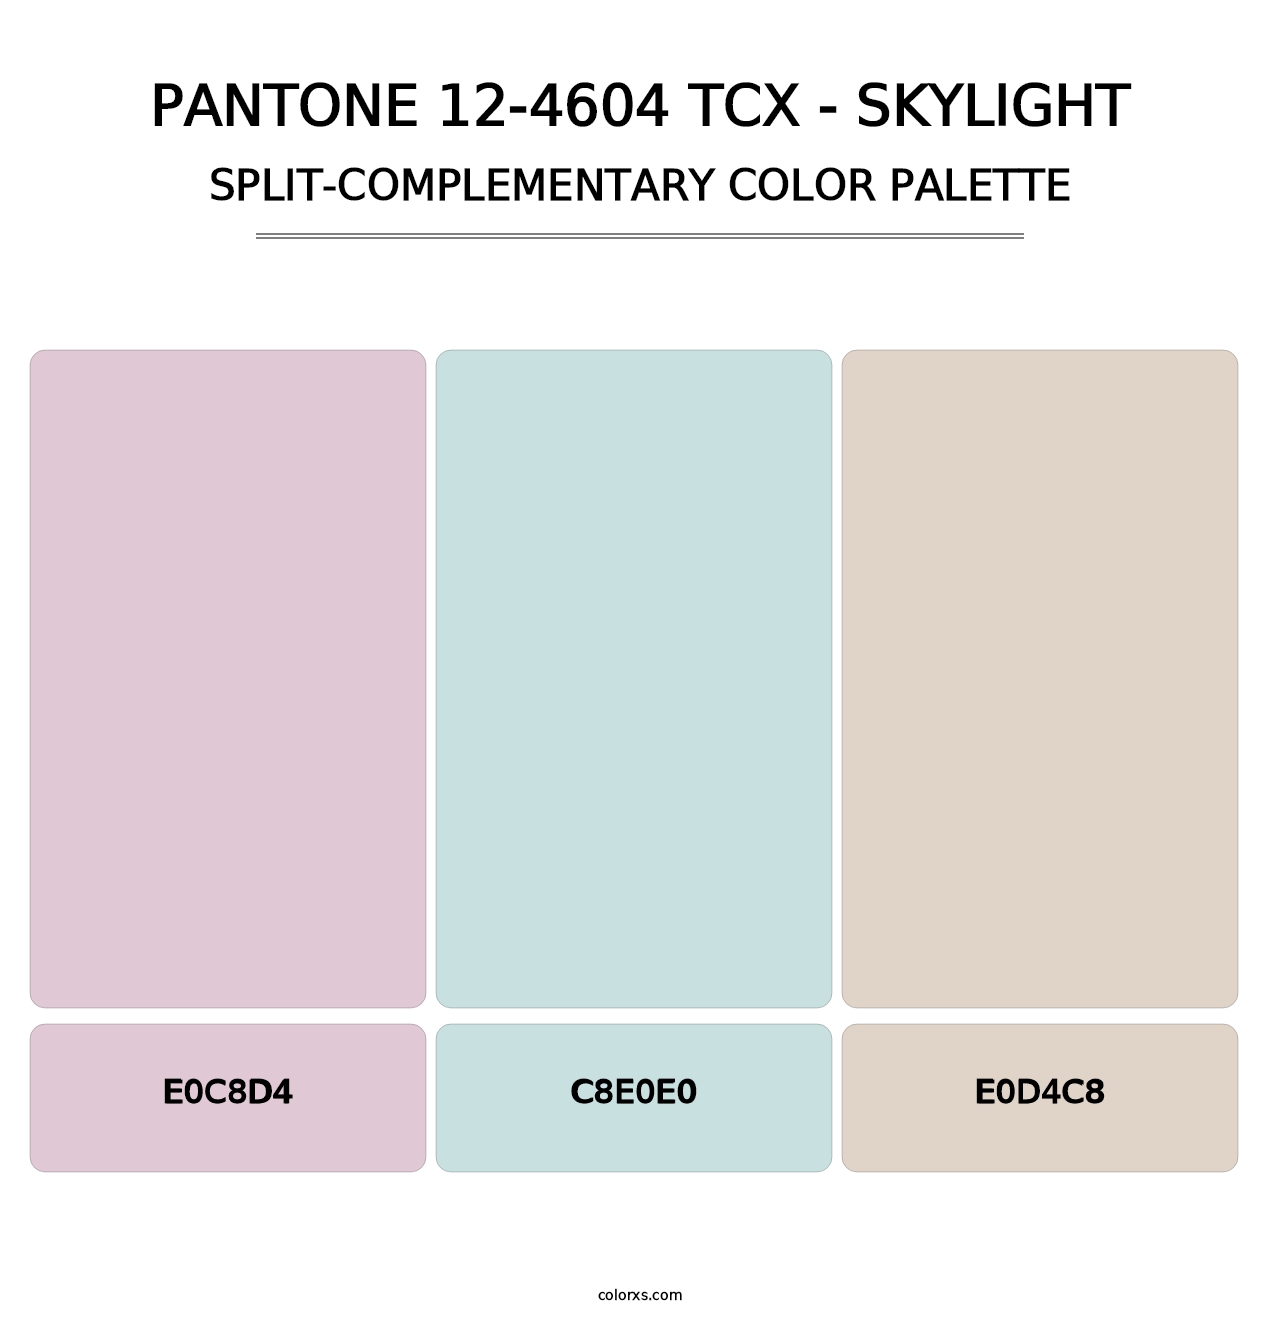 PANTONE 12-4604 TCX - Skylight - Split-Complementary Color Palette